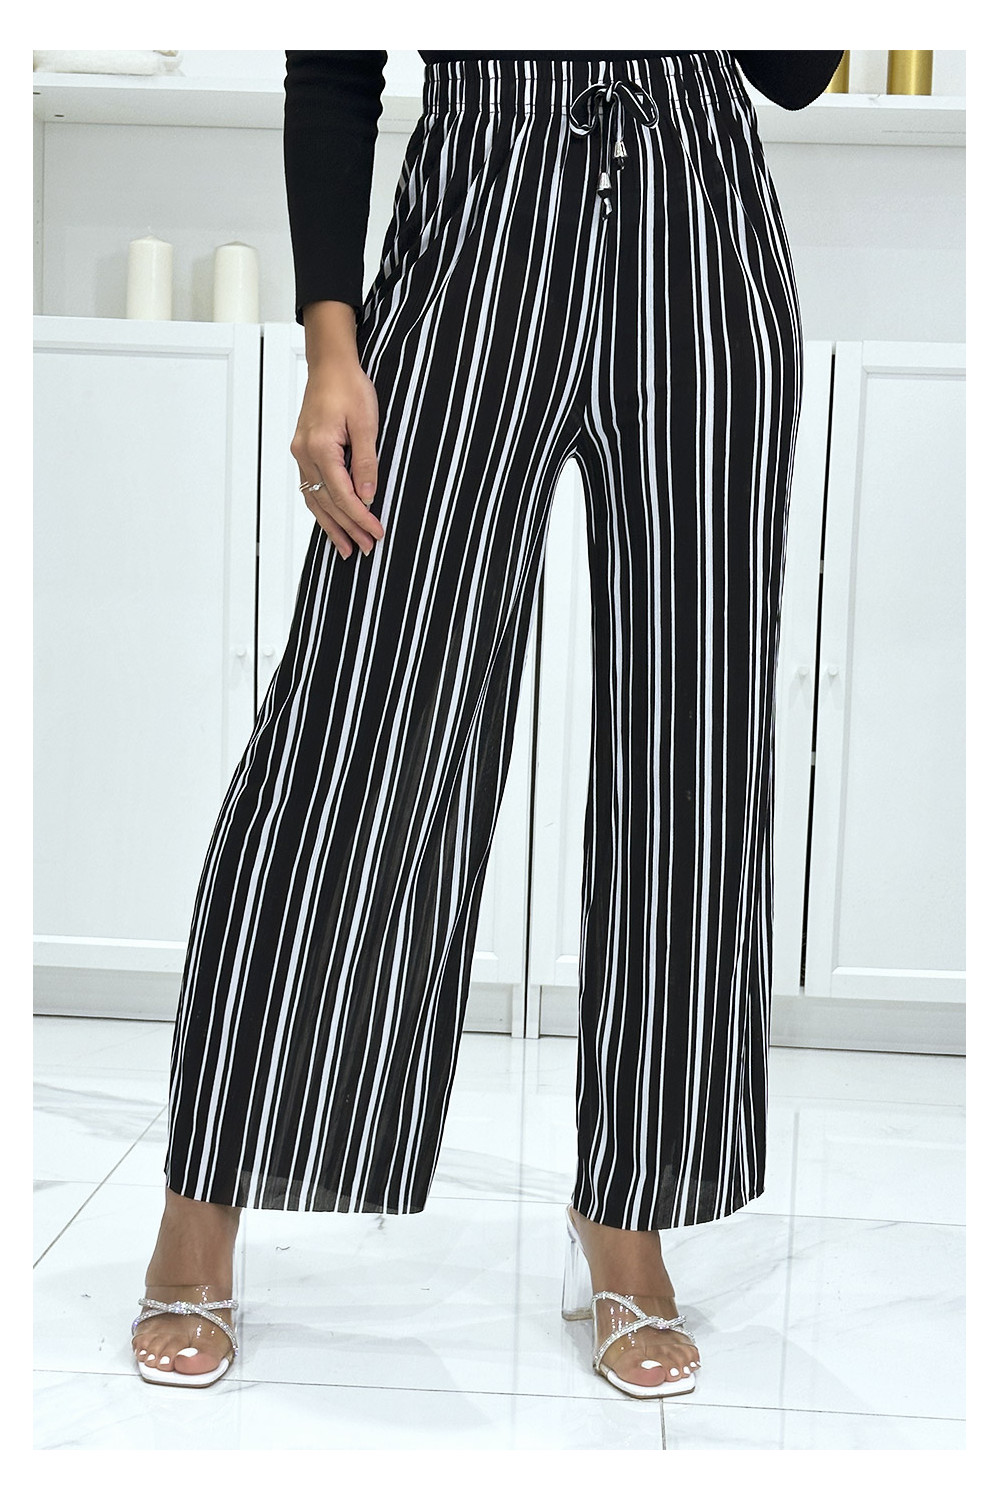 Black and white striped palazzo pants